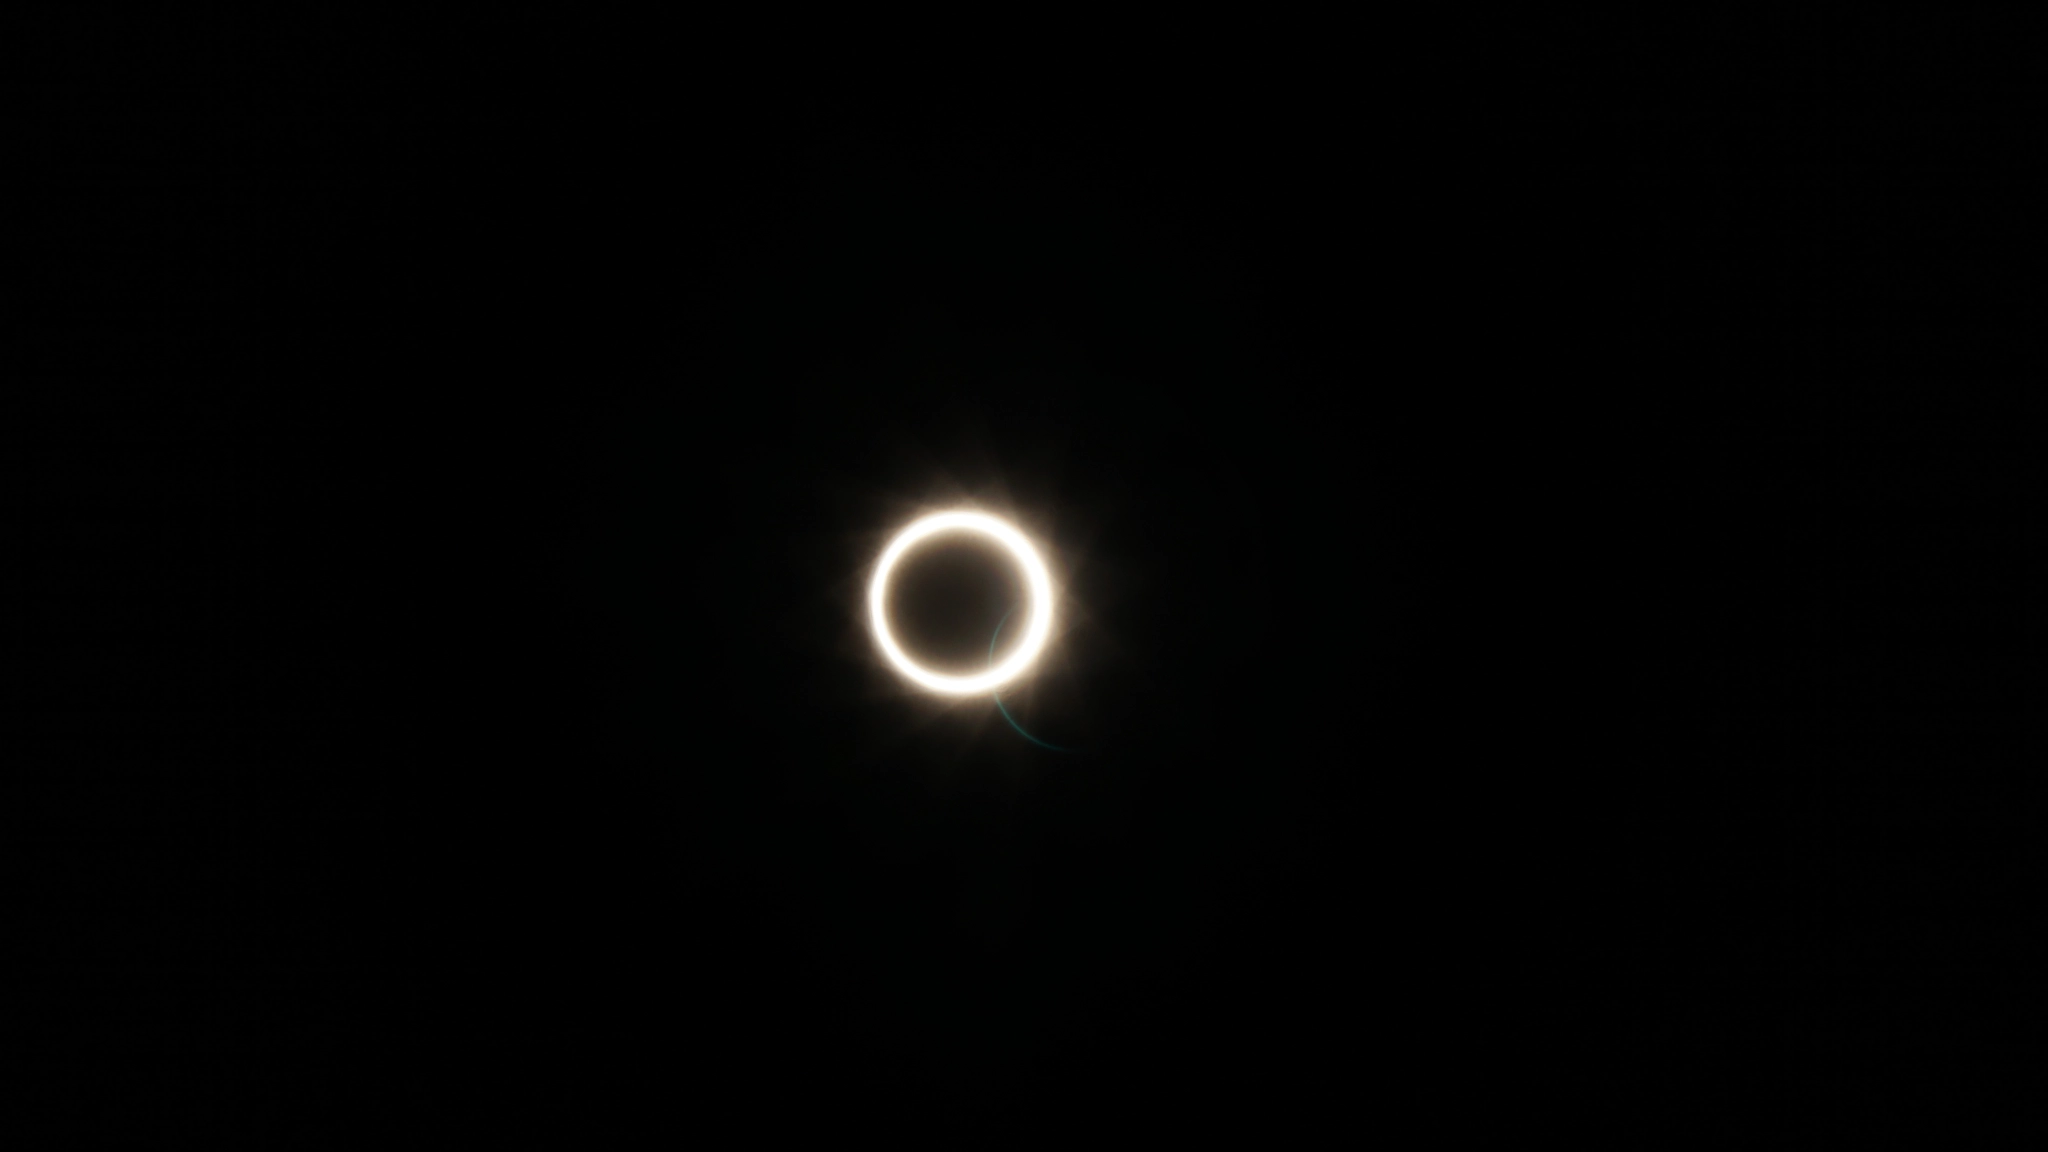 Sony a6300 sample photo. Anular eclipse photography